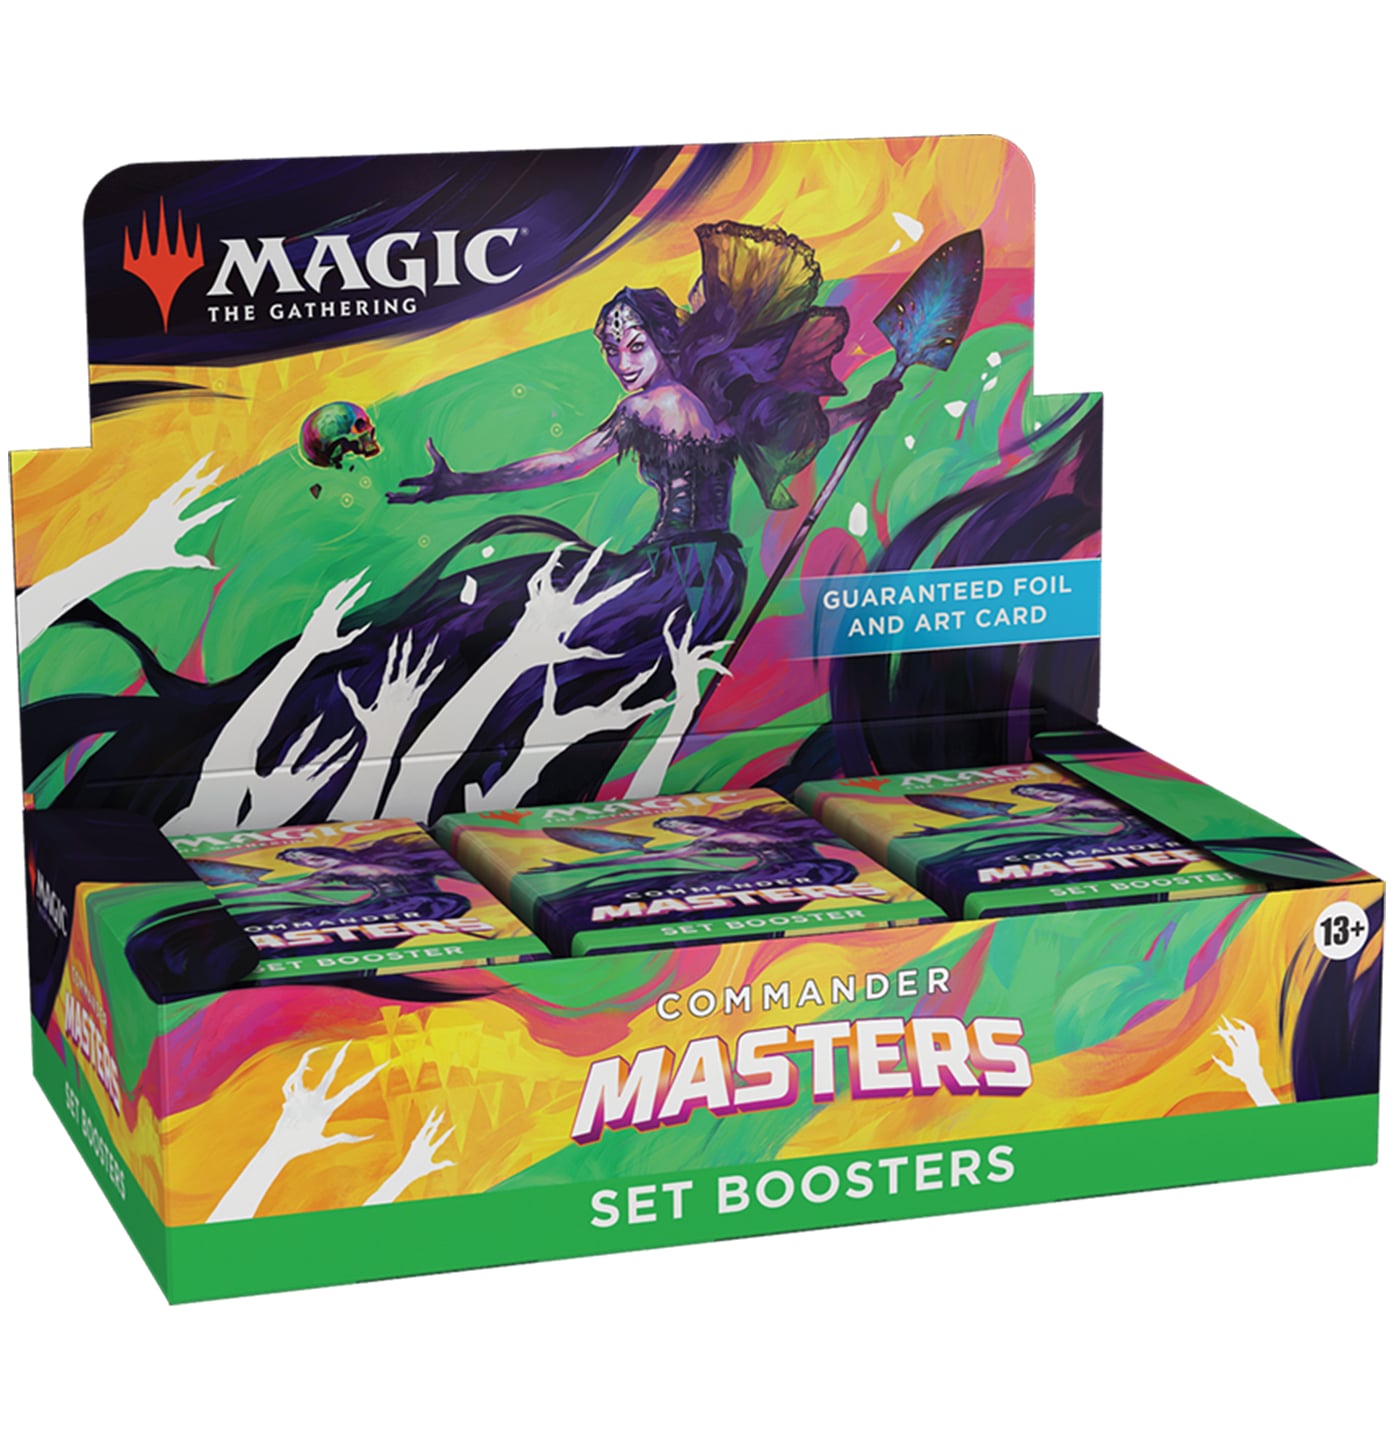 Commander Masters Set Booster Display - Magic the Gathering - EN